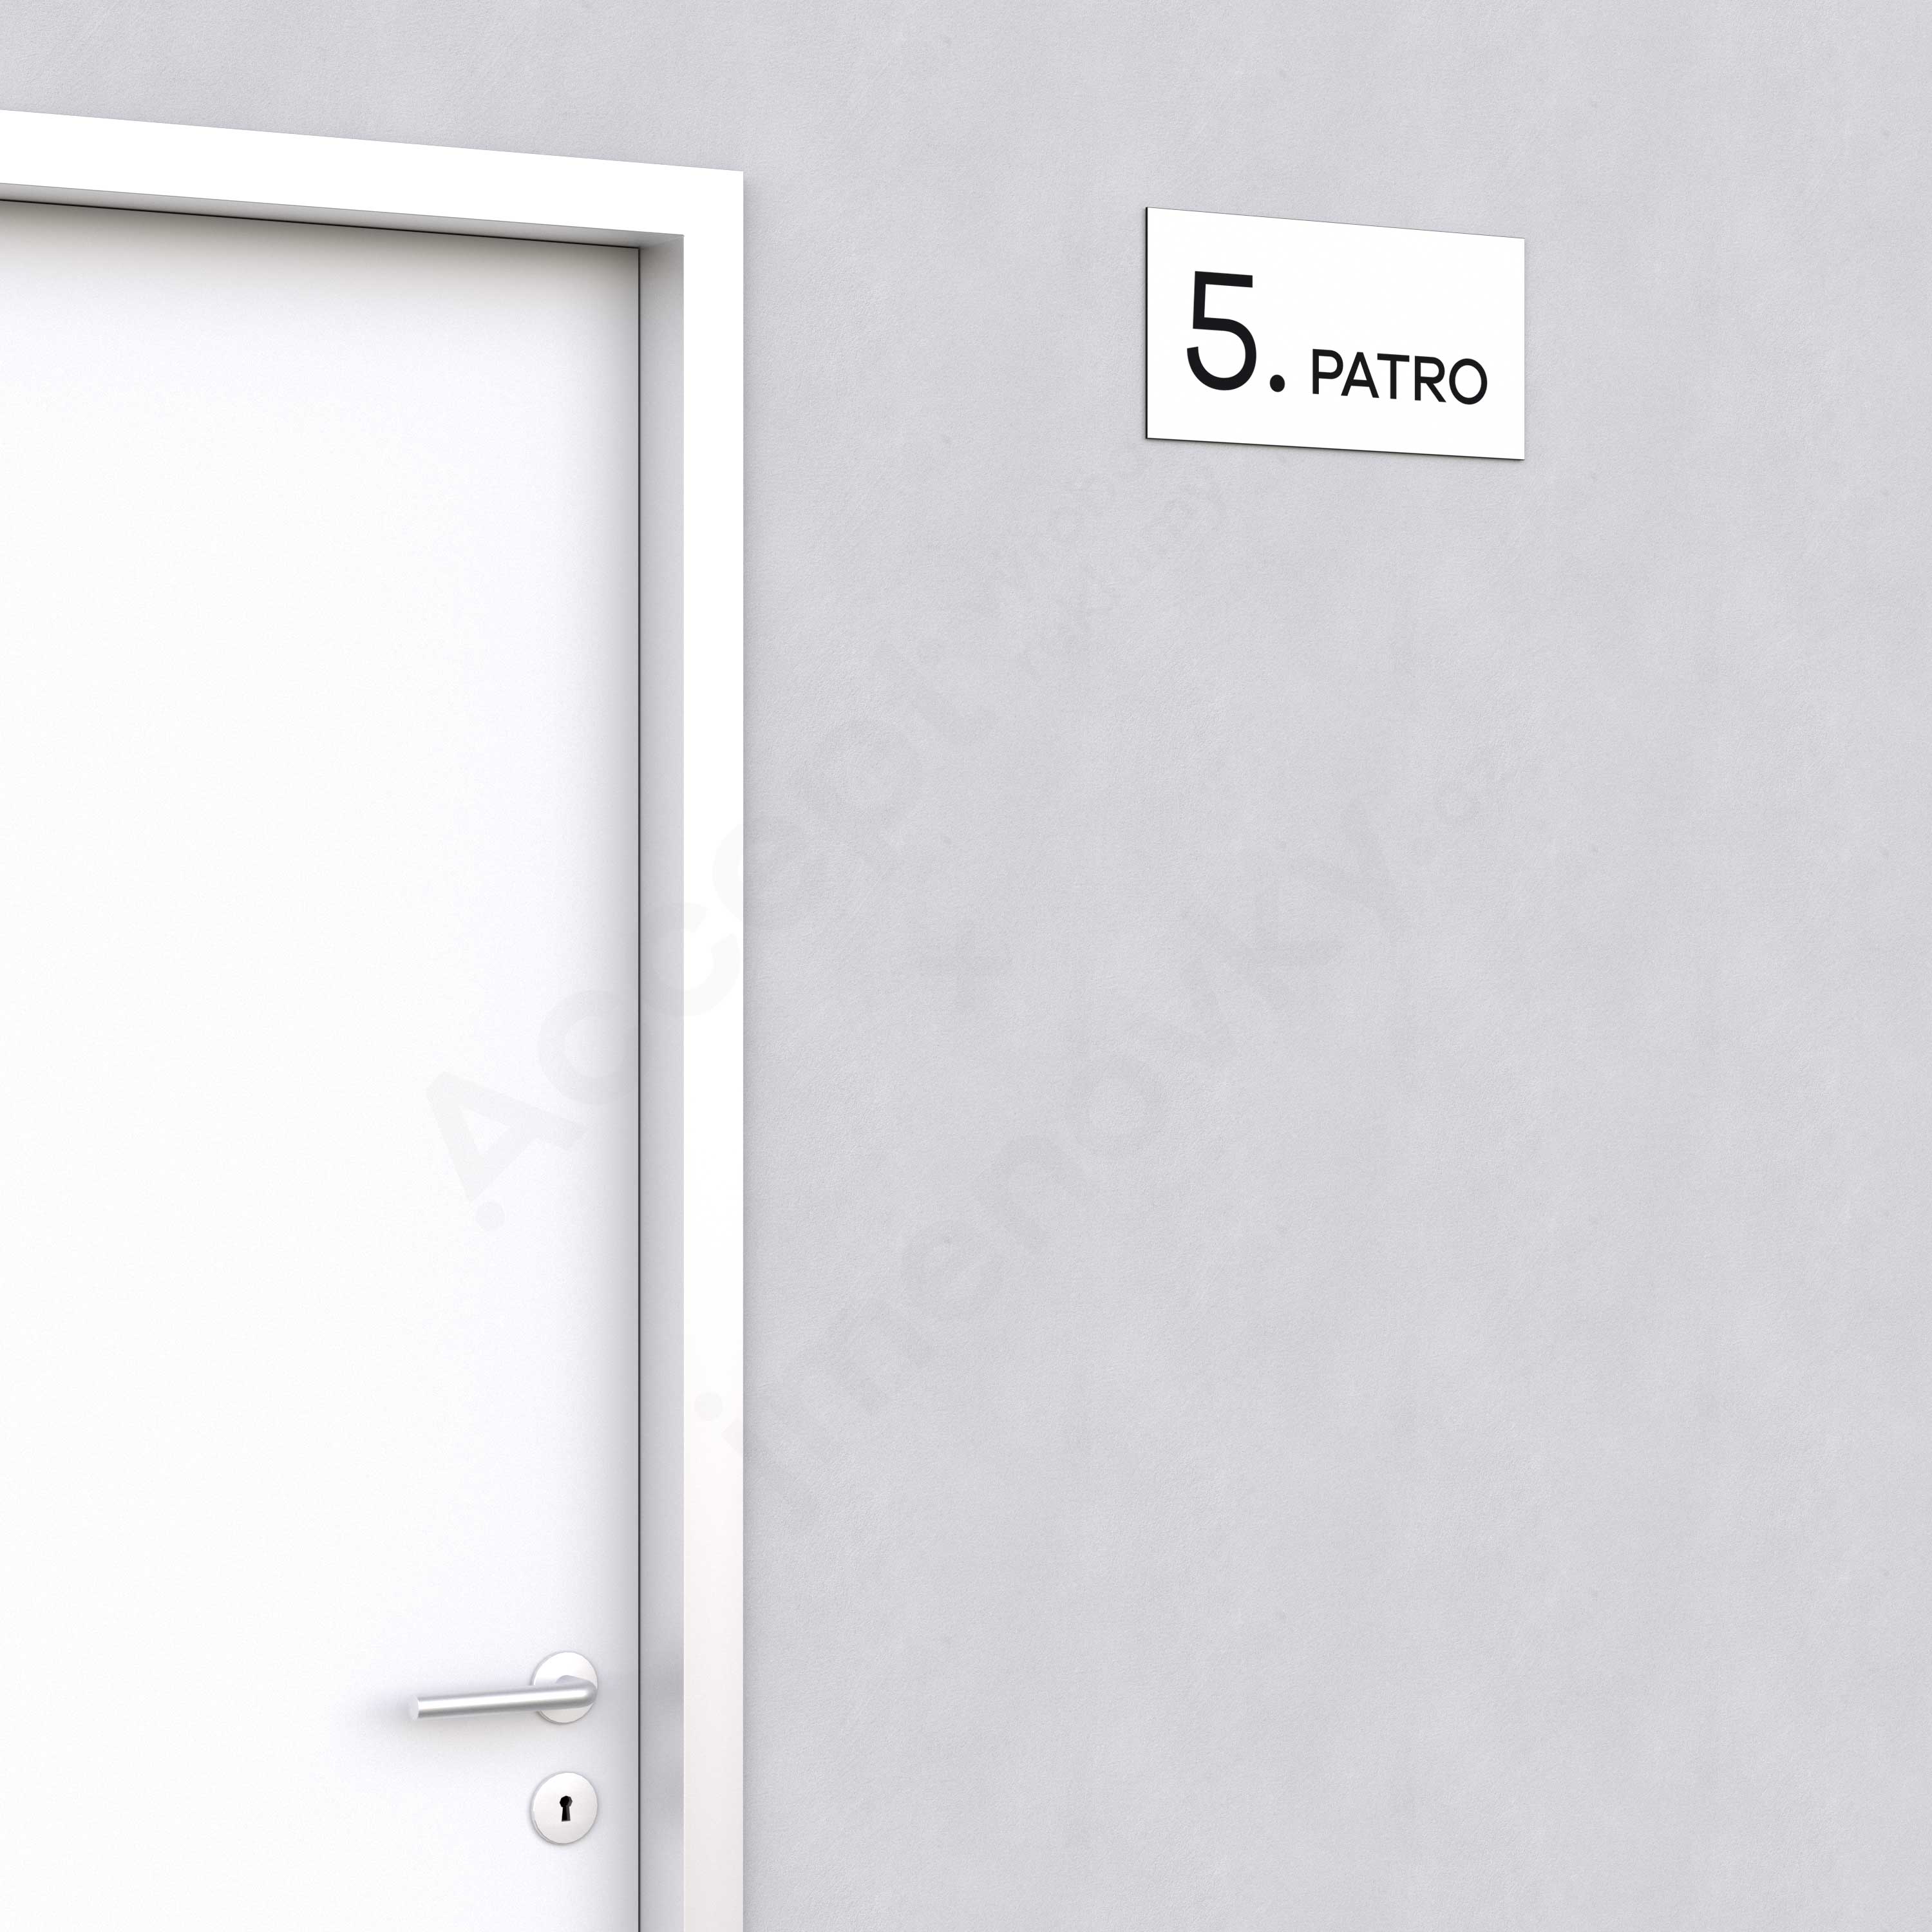 Označení podlaží "5. PATRO" - bílá tabulka - černý popis - náhled